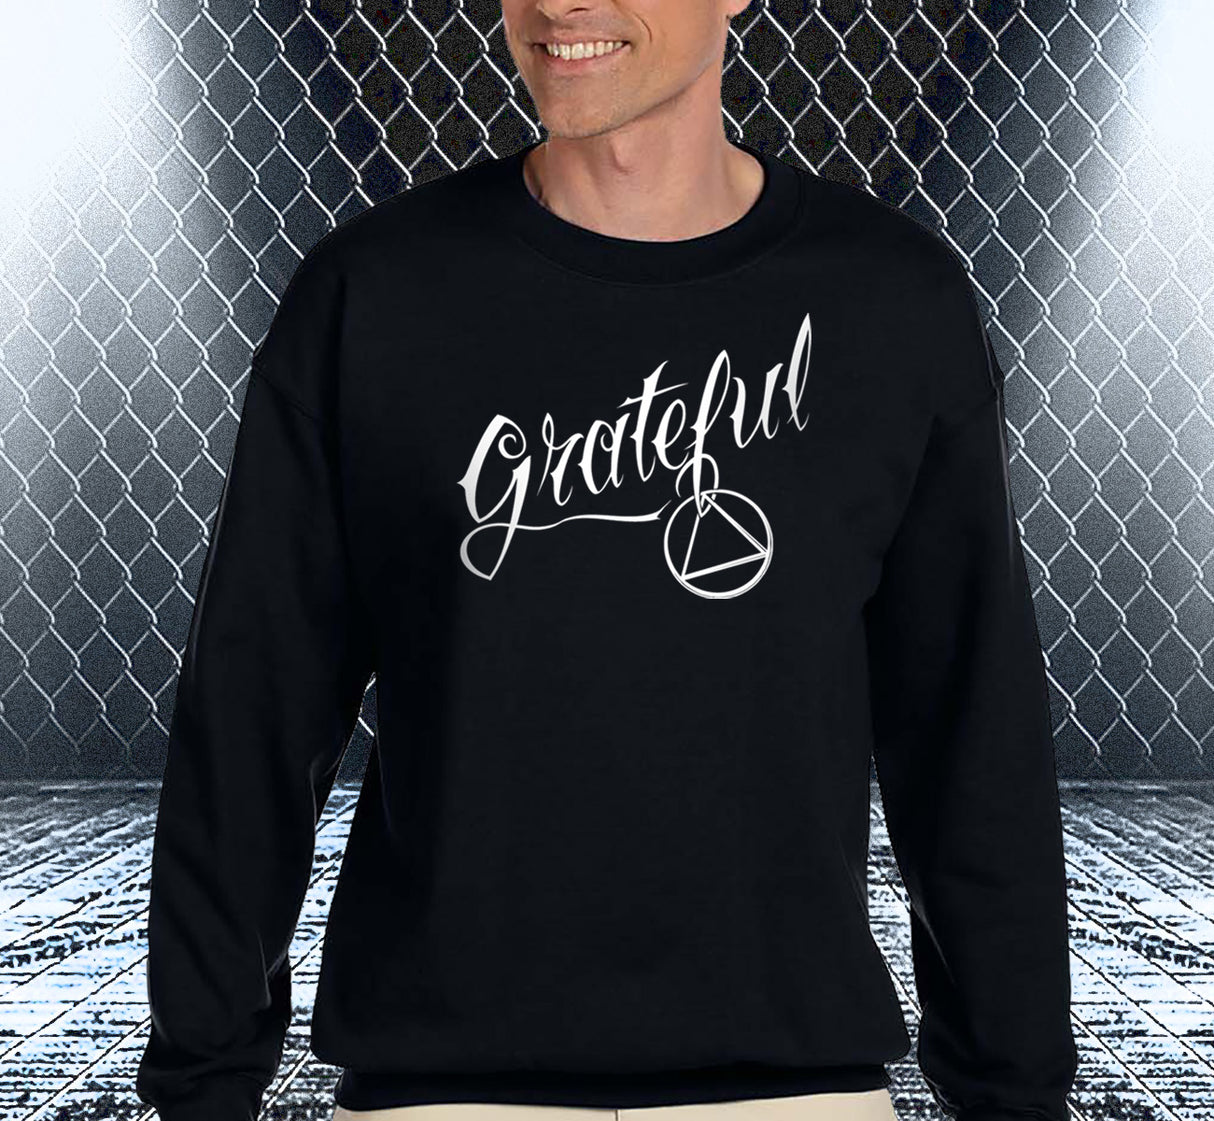 AA Grateful Sweatshirt